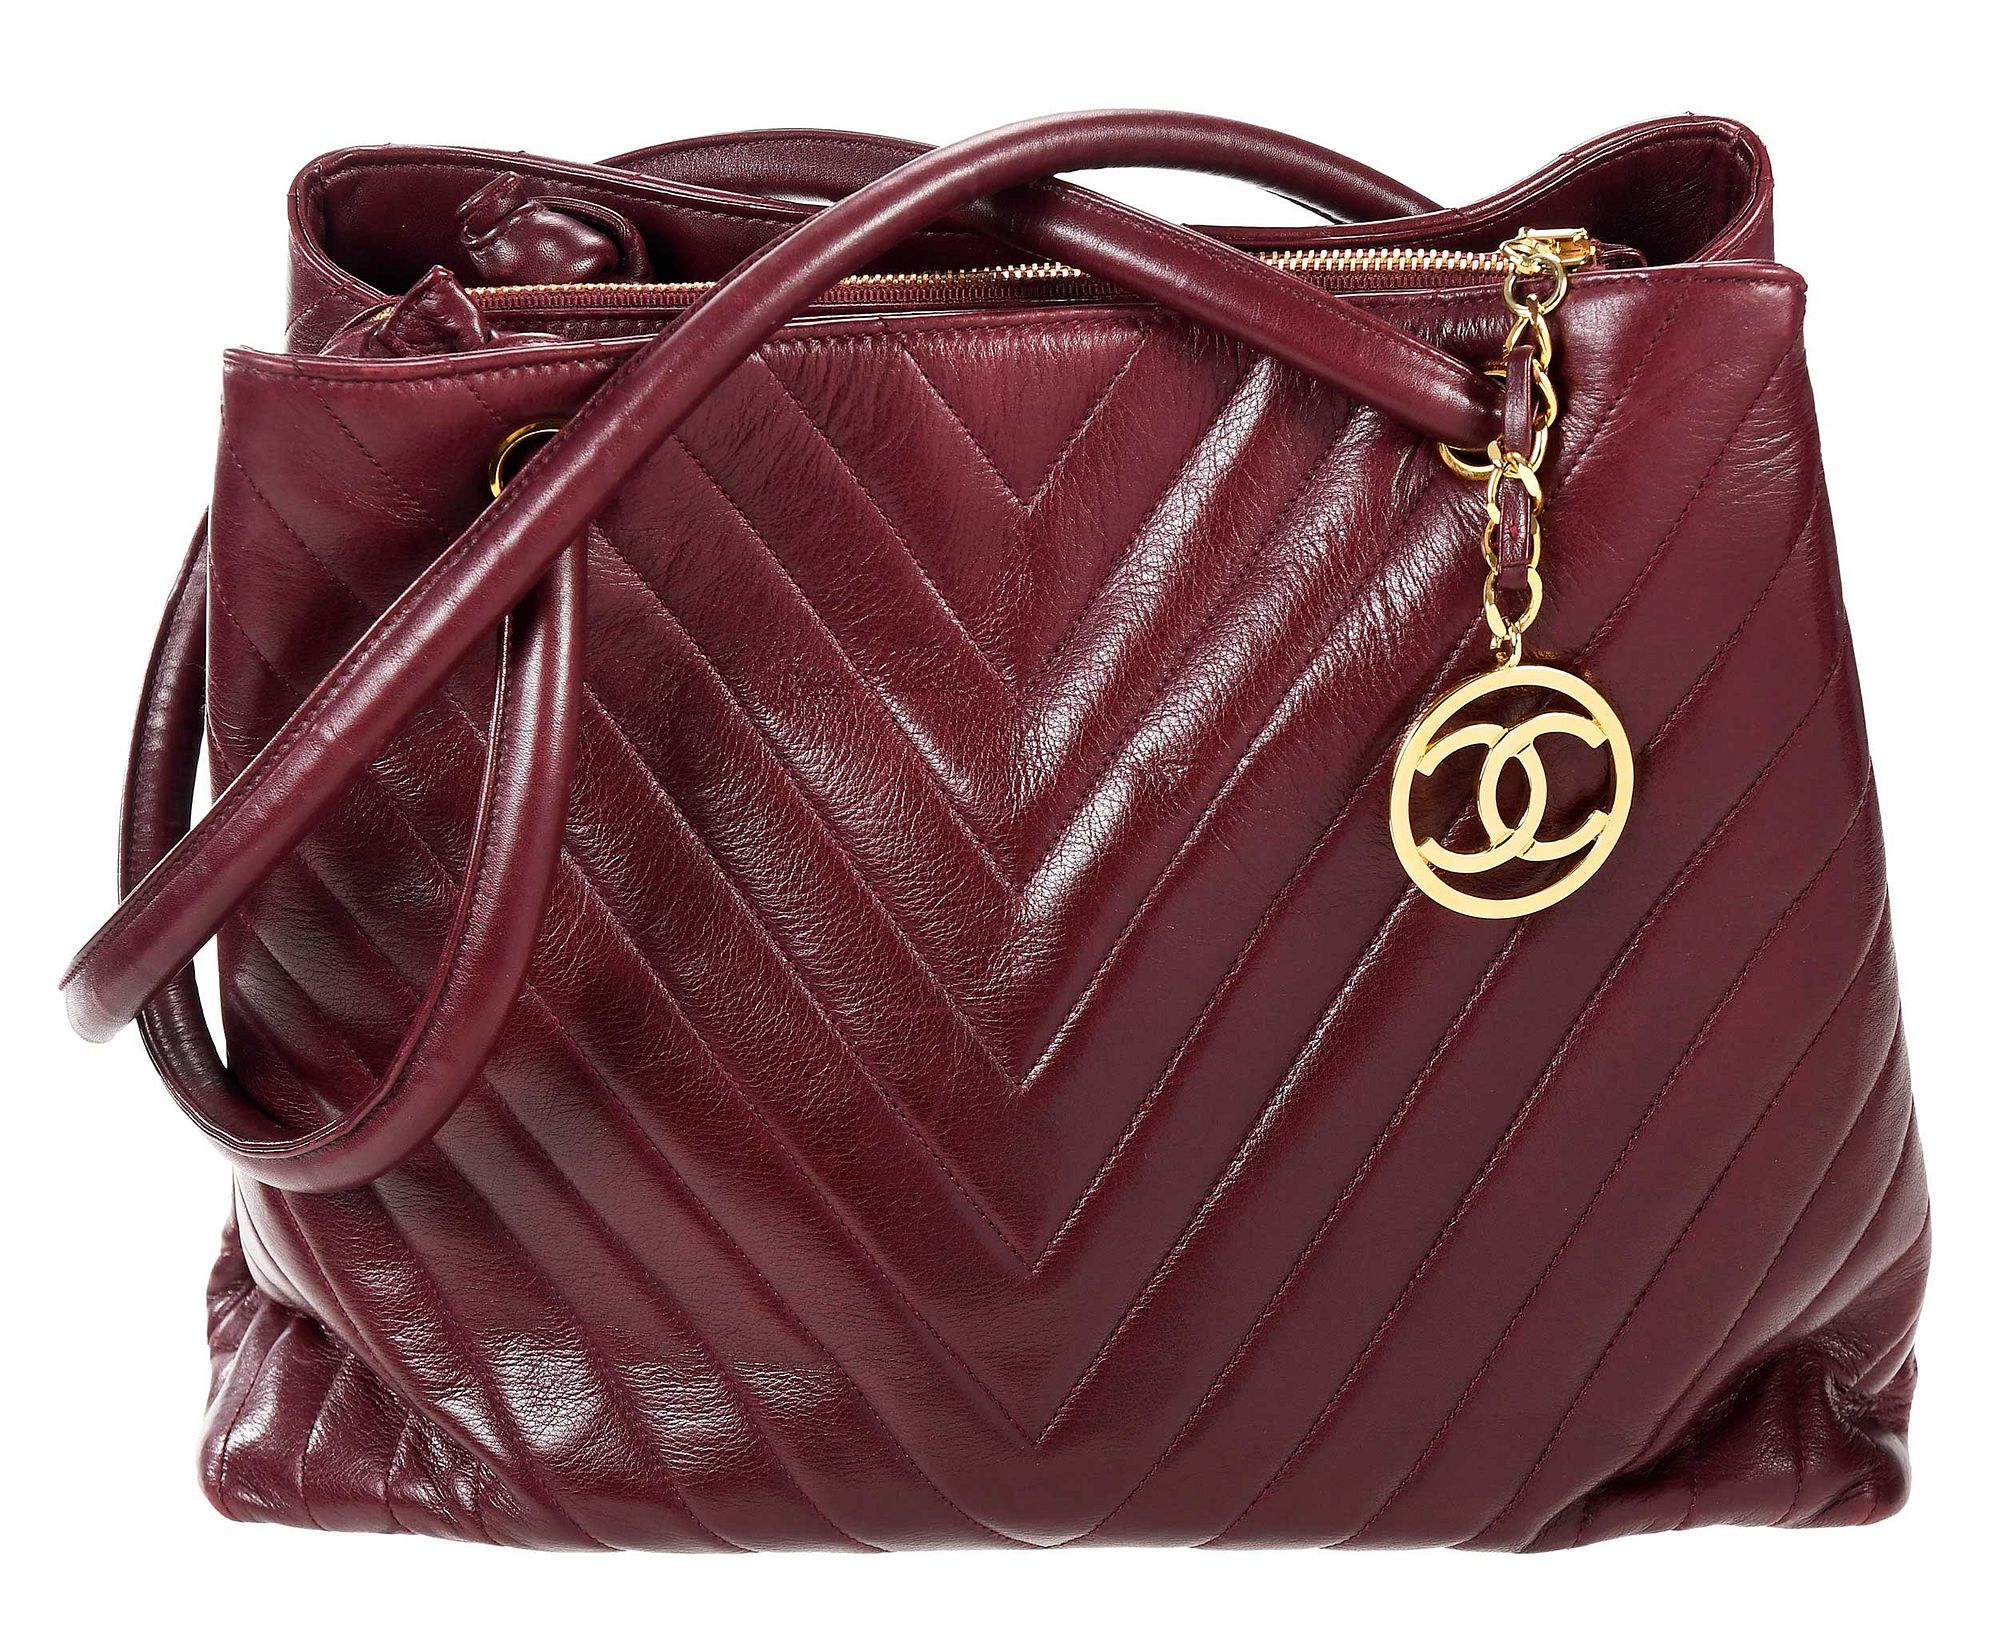 Sold at Auction: Burgundy Patent Leather CHANEL Shoulder Bag